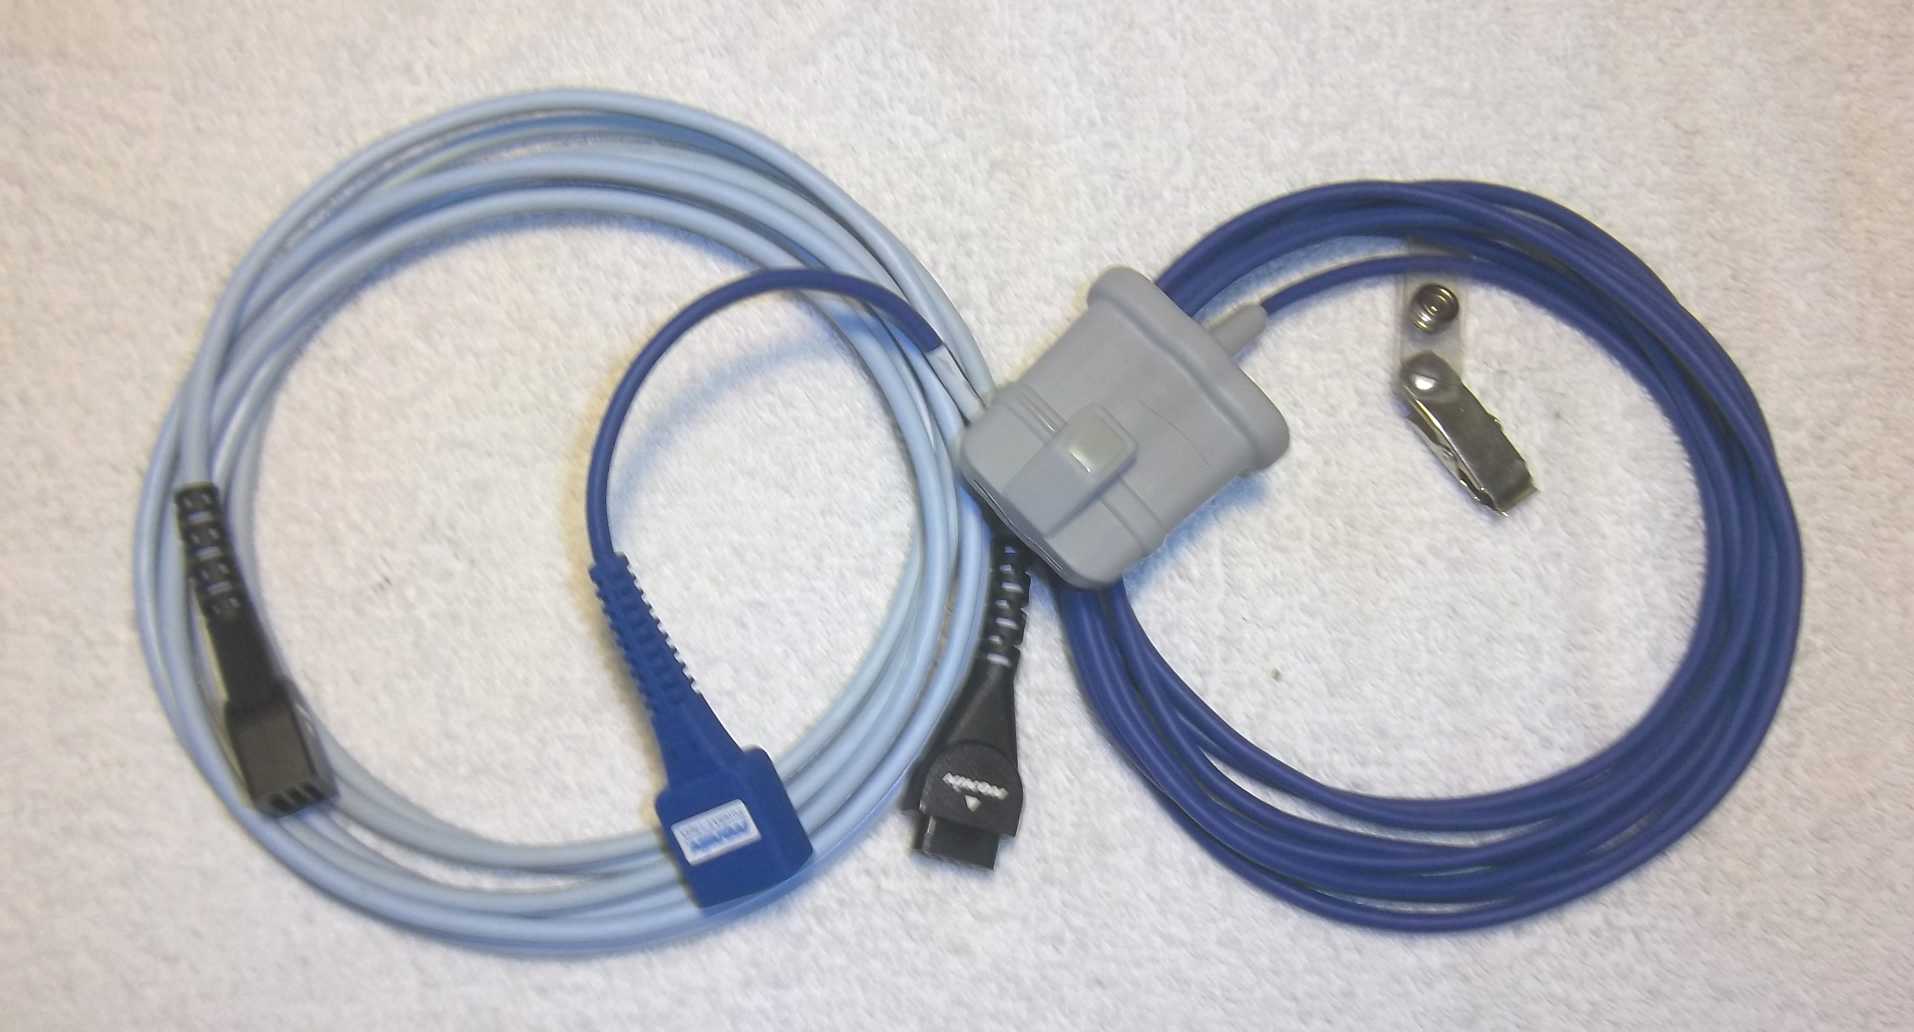 Nonin SPO2 Finger Sensor and12 ft Extension Cable